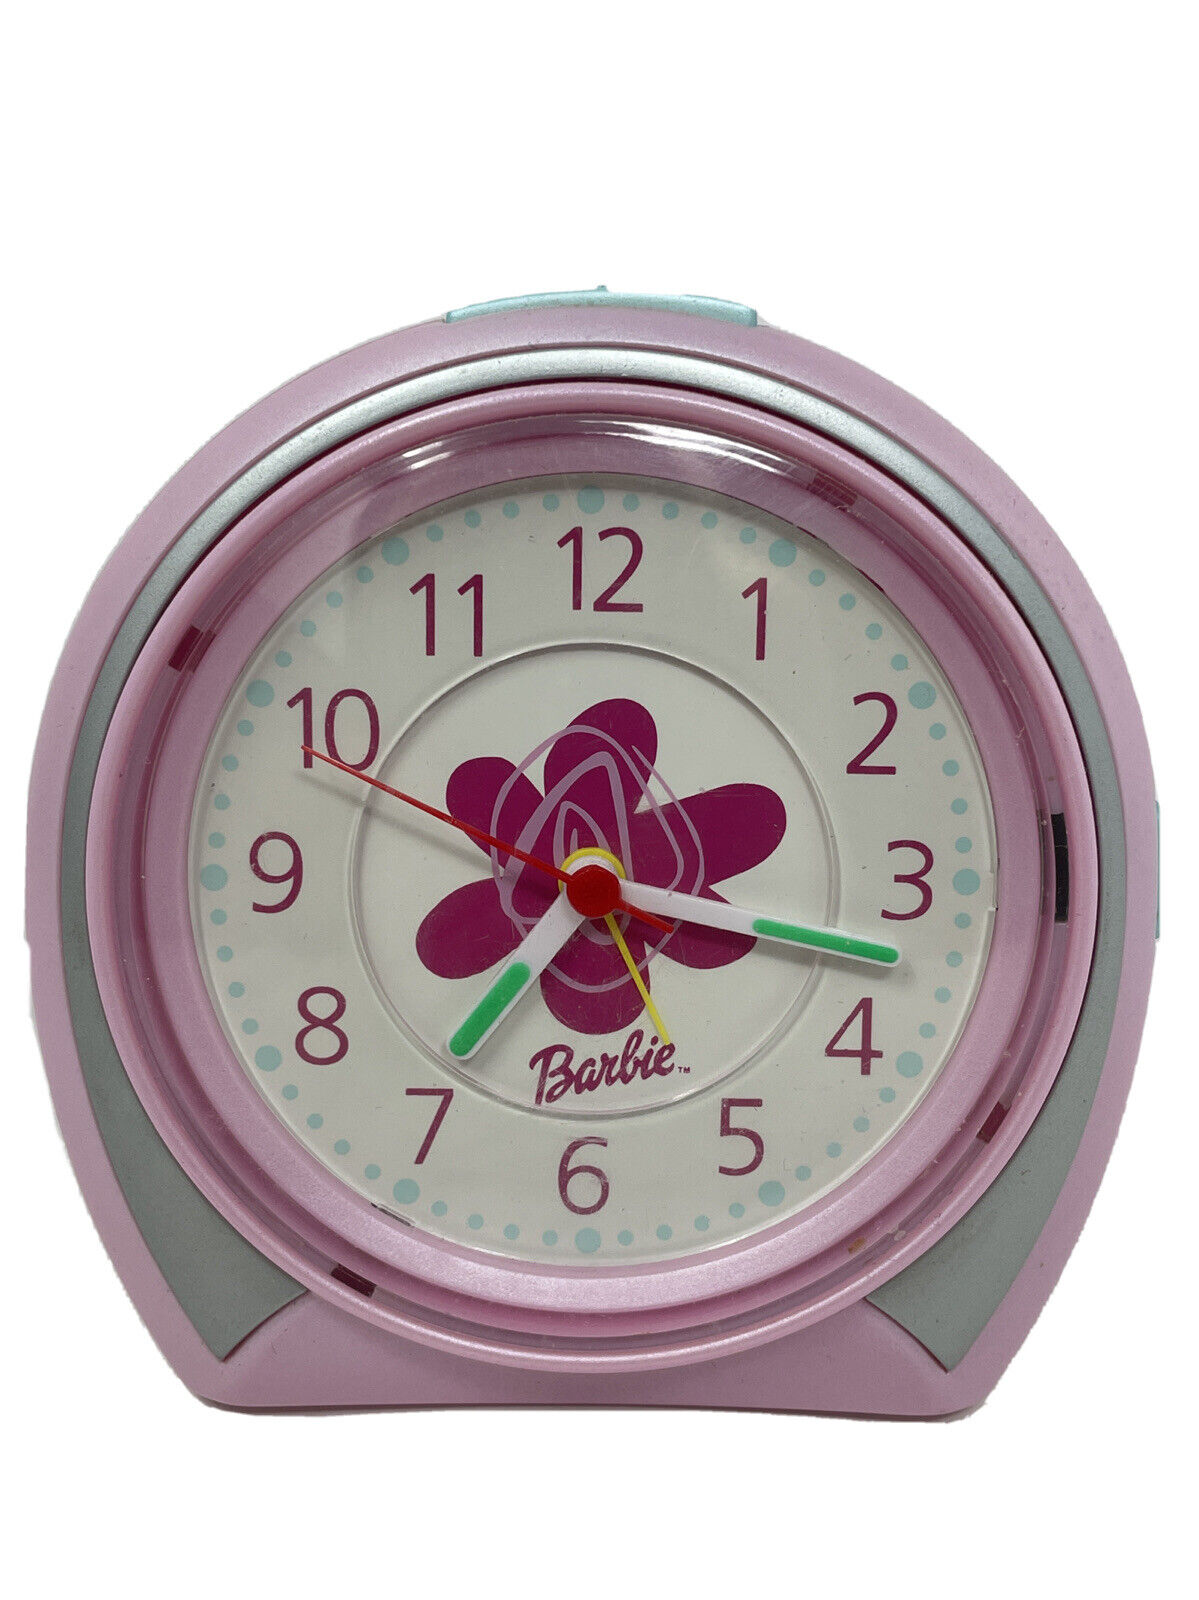 Barbie Analog Alarm Clock Backlit Clock Face Glow In The Dark  2003